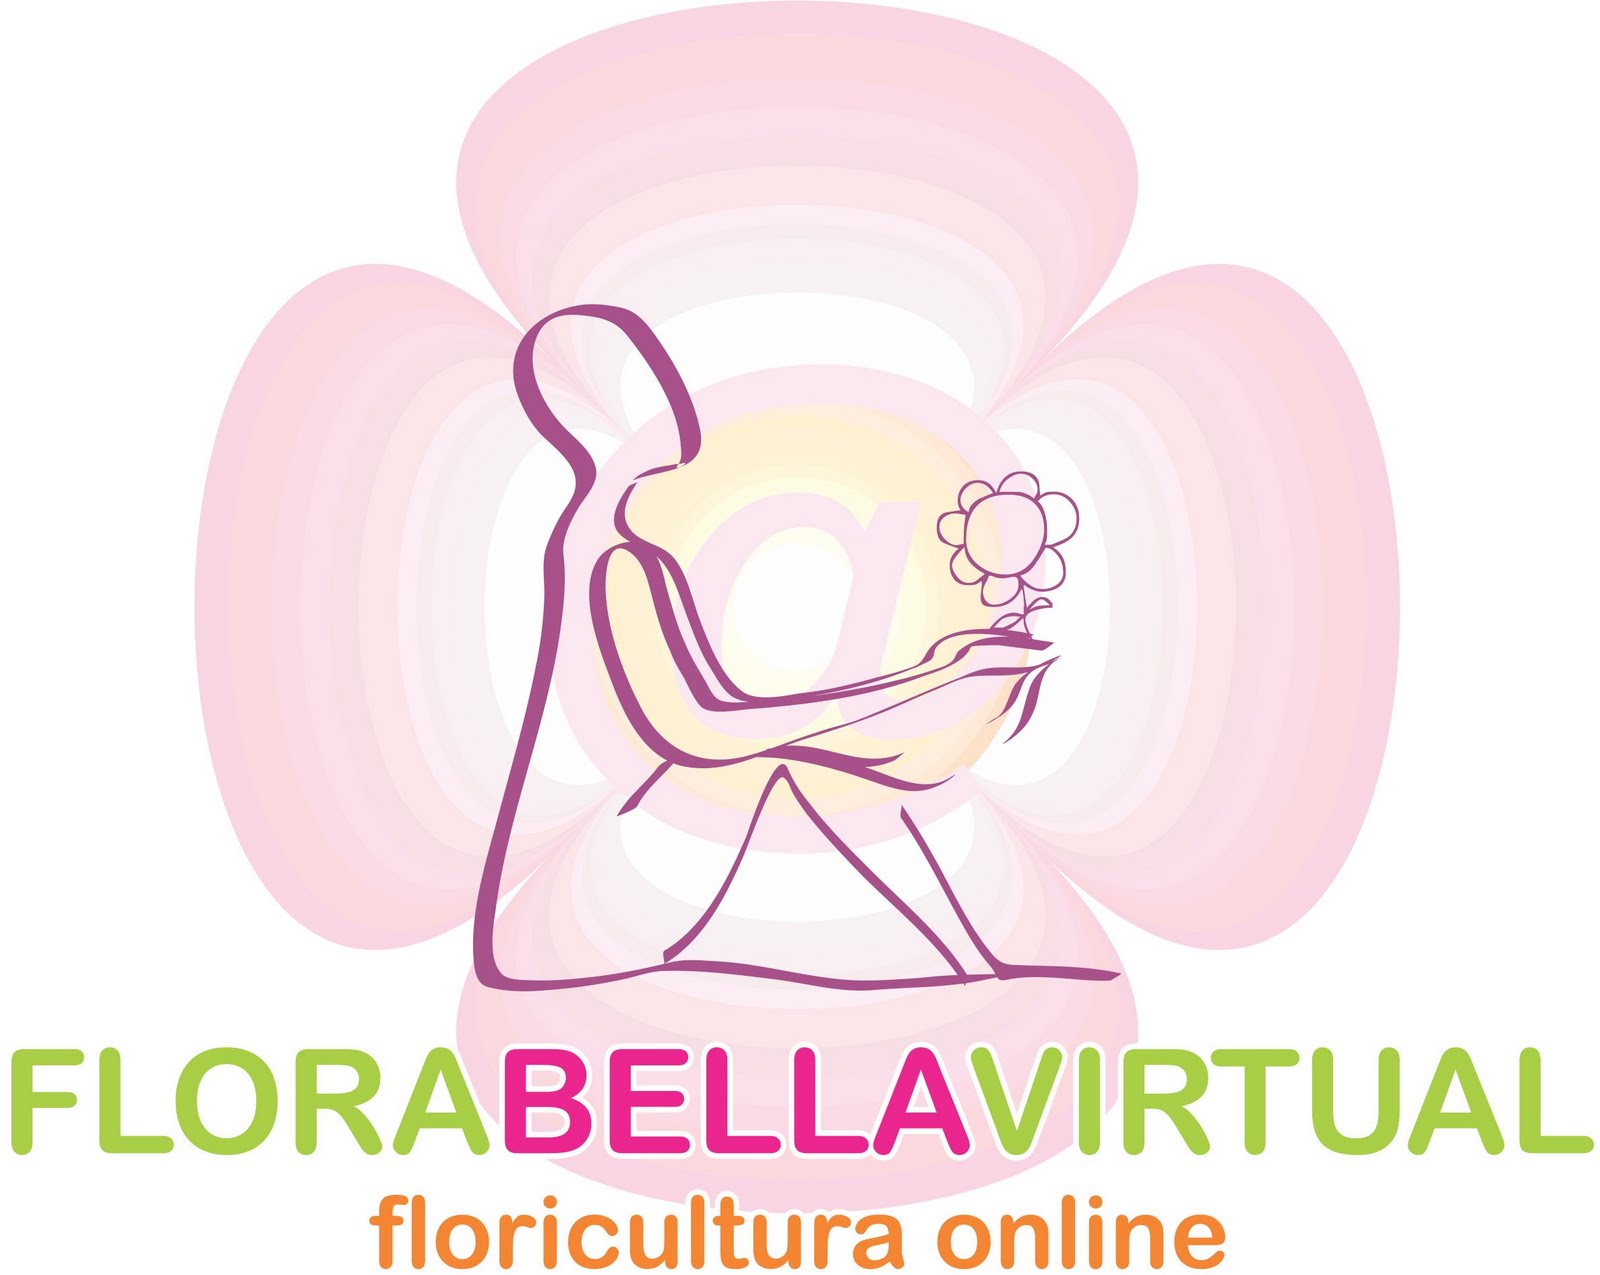 Floricultura Online – Venda de Flores